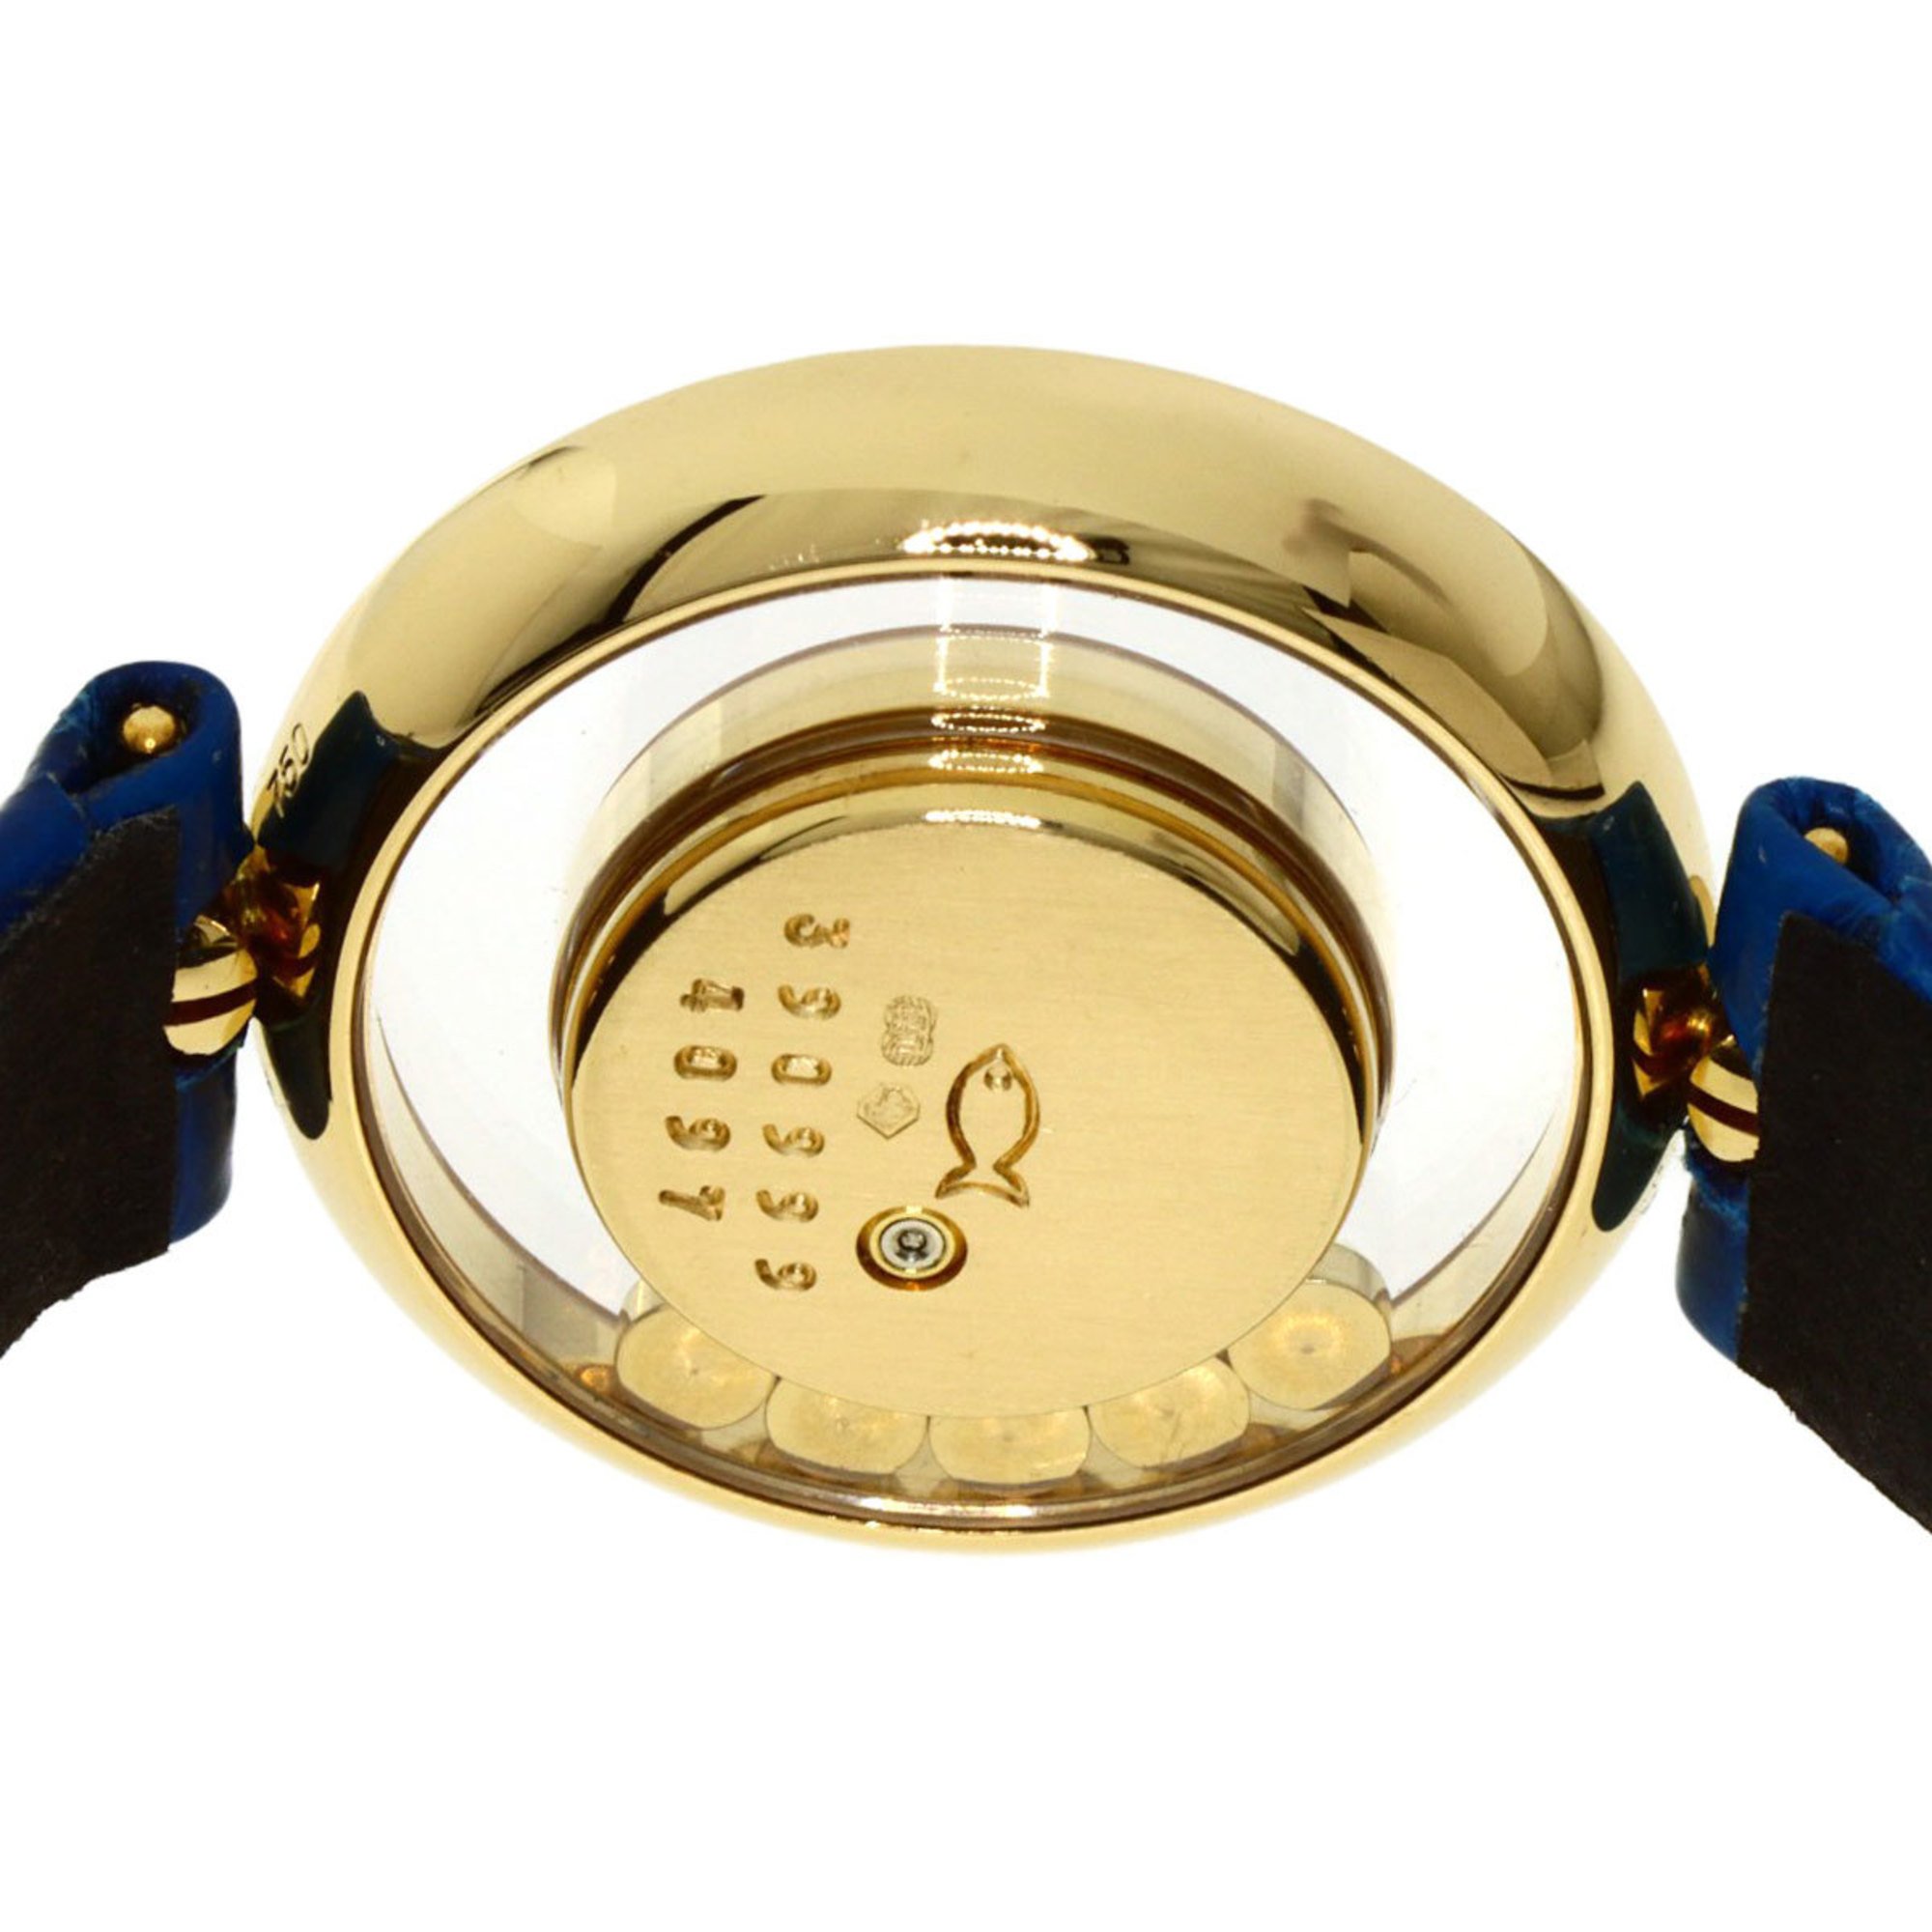 Chopard 20 3957 Happy Diamonds Watch, 18K Yellow Gold, Leather, Diamonds, Women's